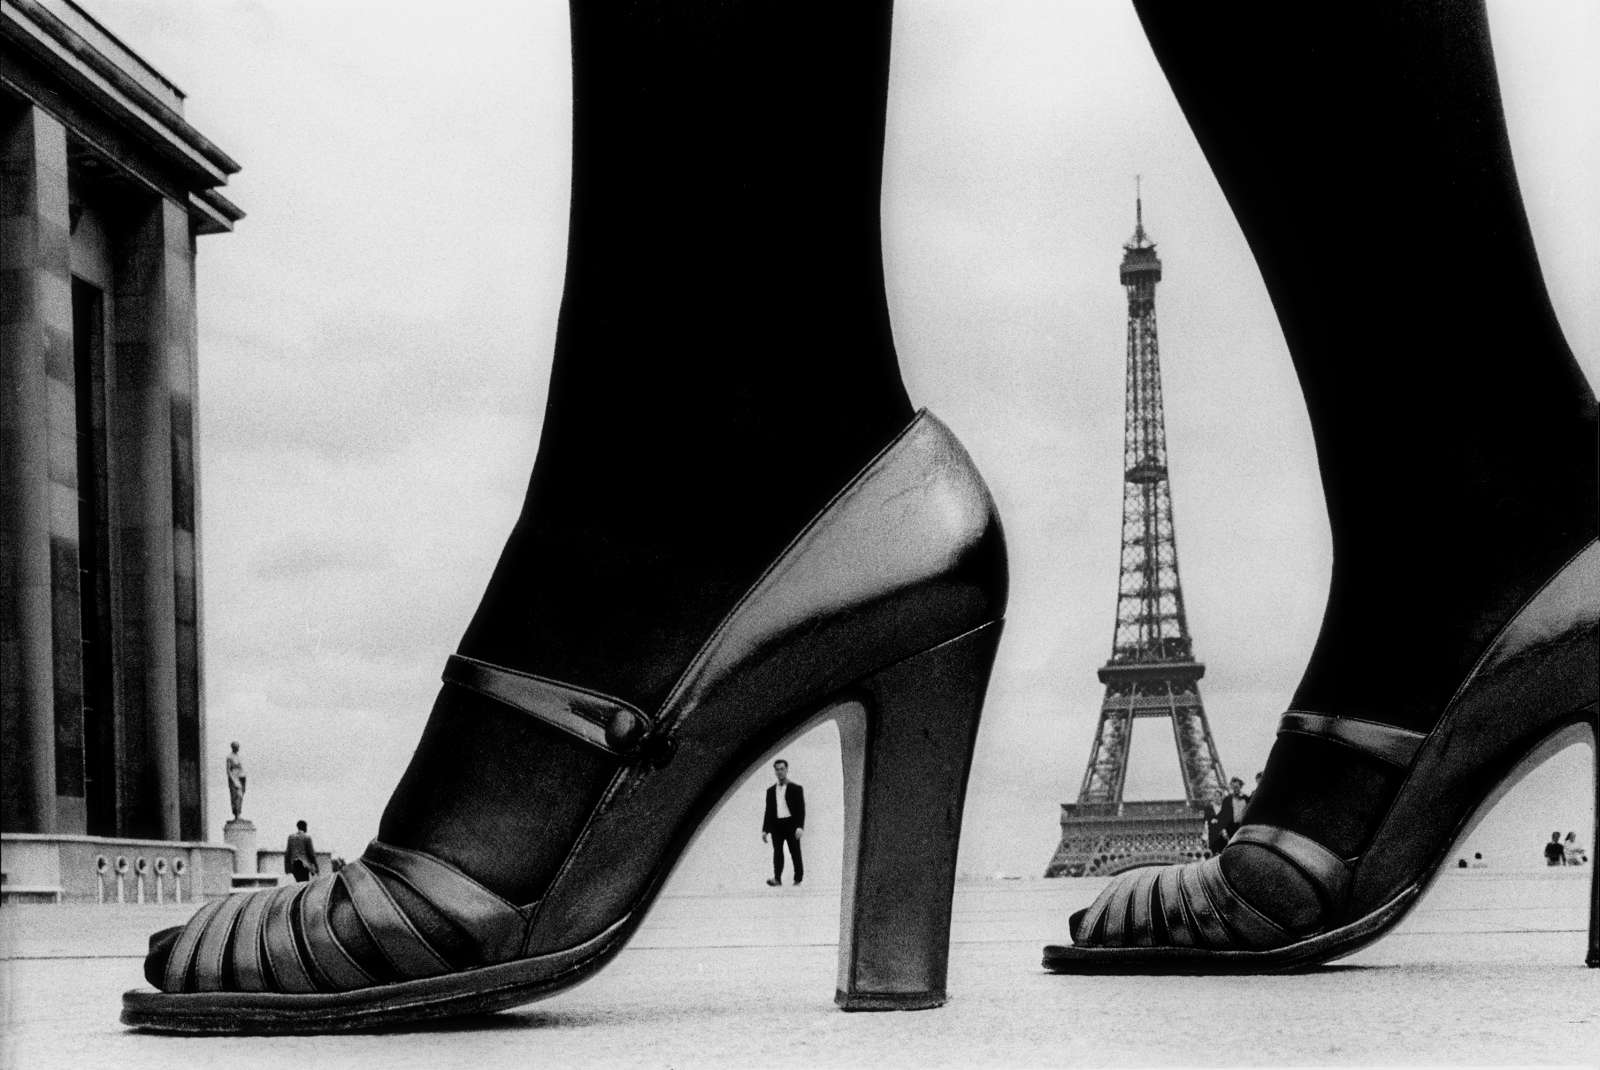 Paris, Shoe and Eiffel Tower A, 1974